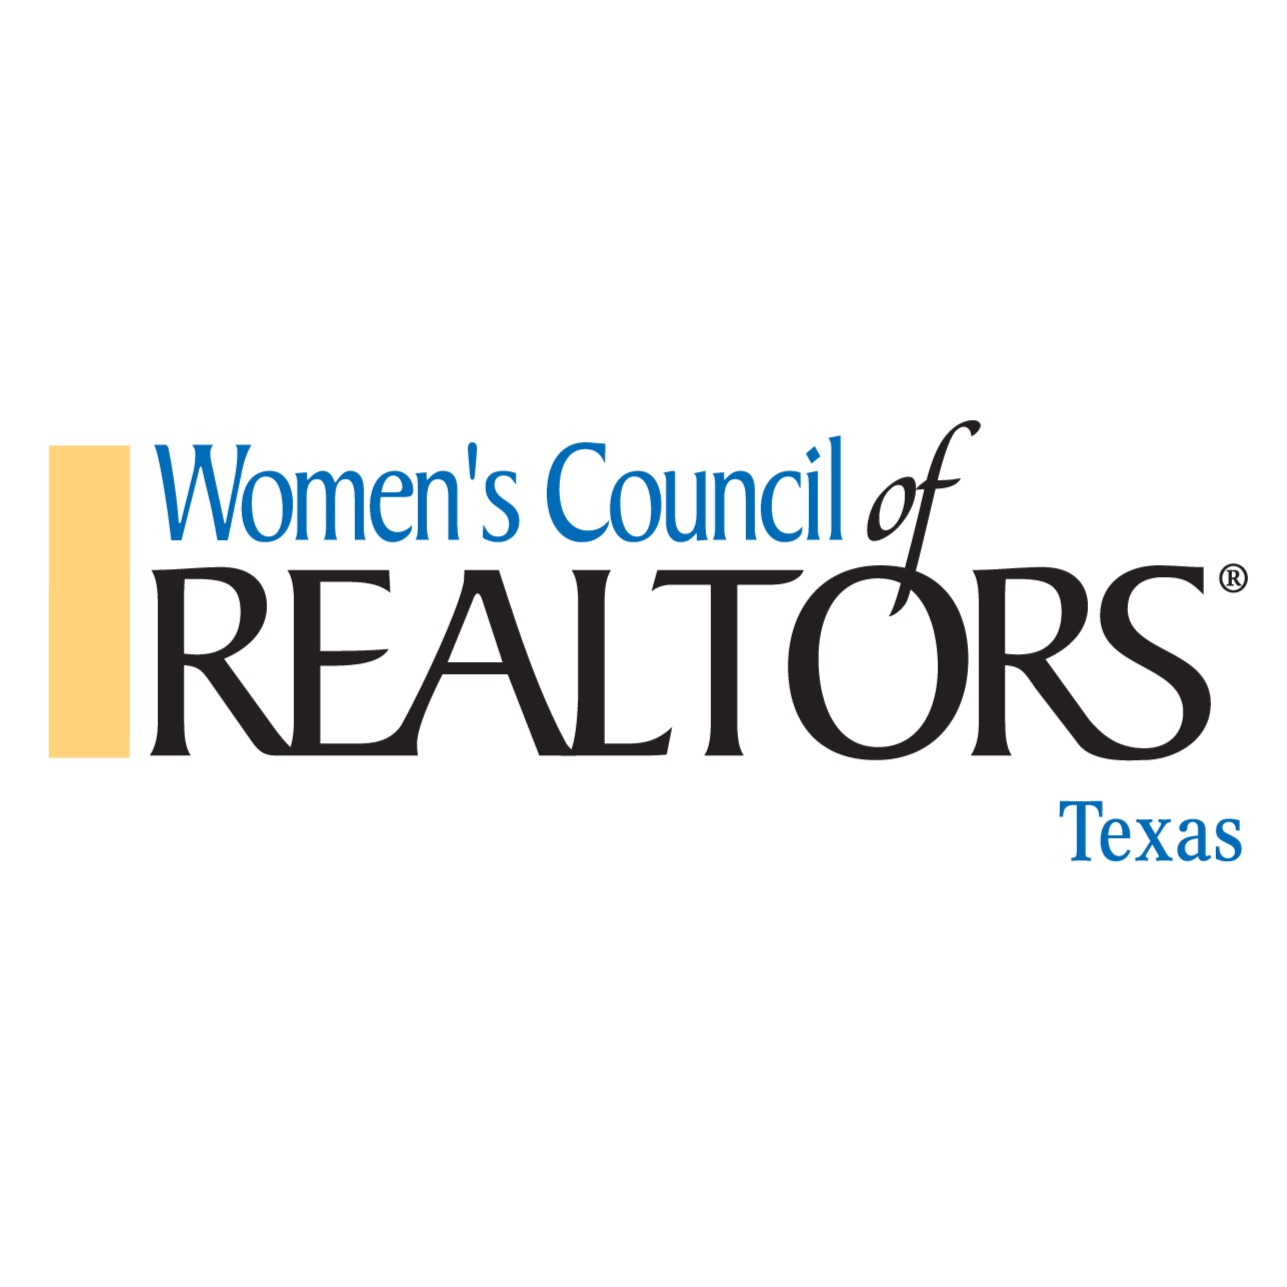 Female Organizations in Texas - Women’s Council of Realtors Texas